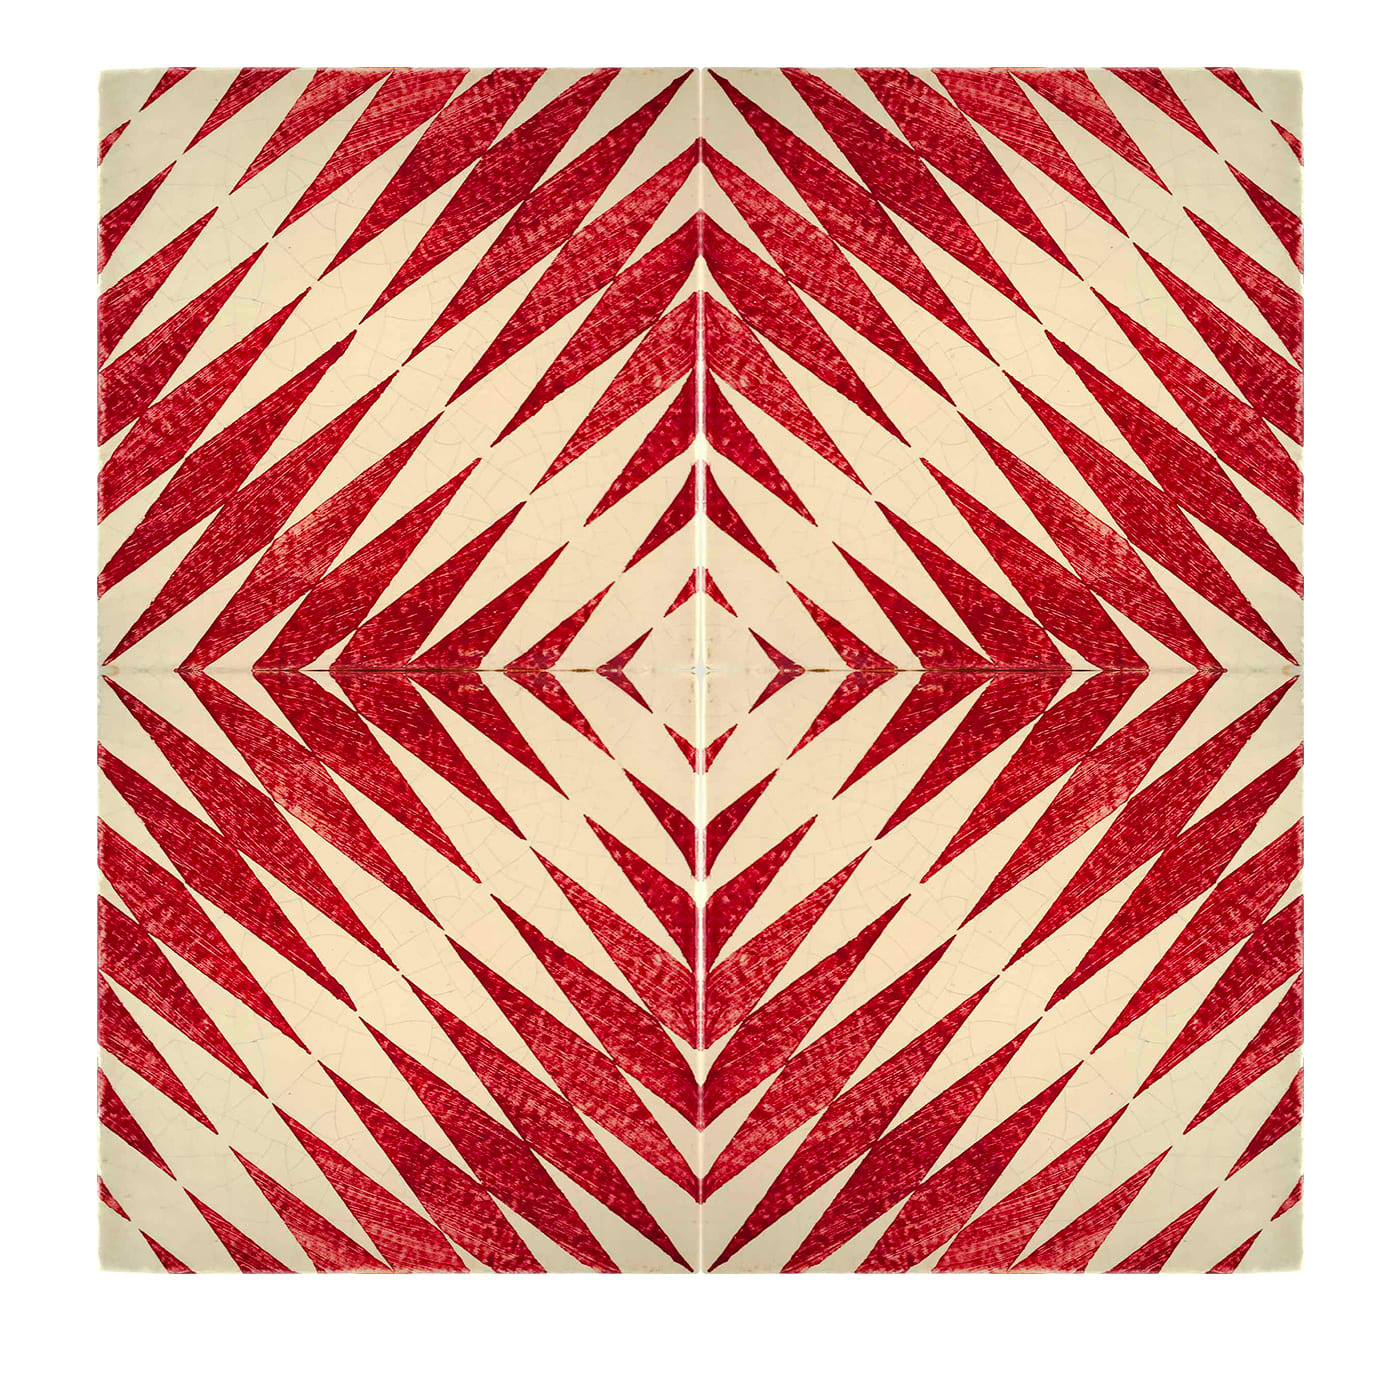 Rosso Ficus Indica Set of 4 Tiles #2 - Studio Le Nid